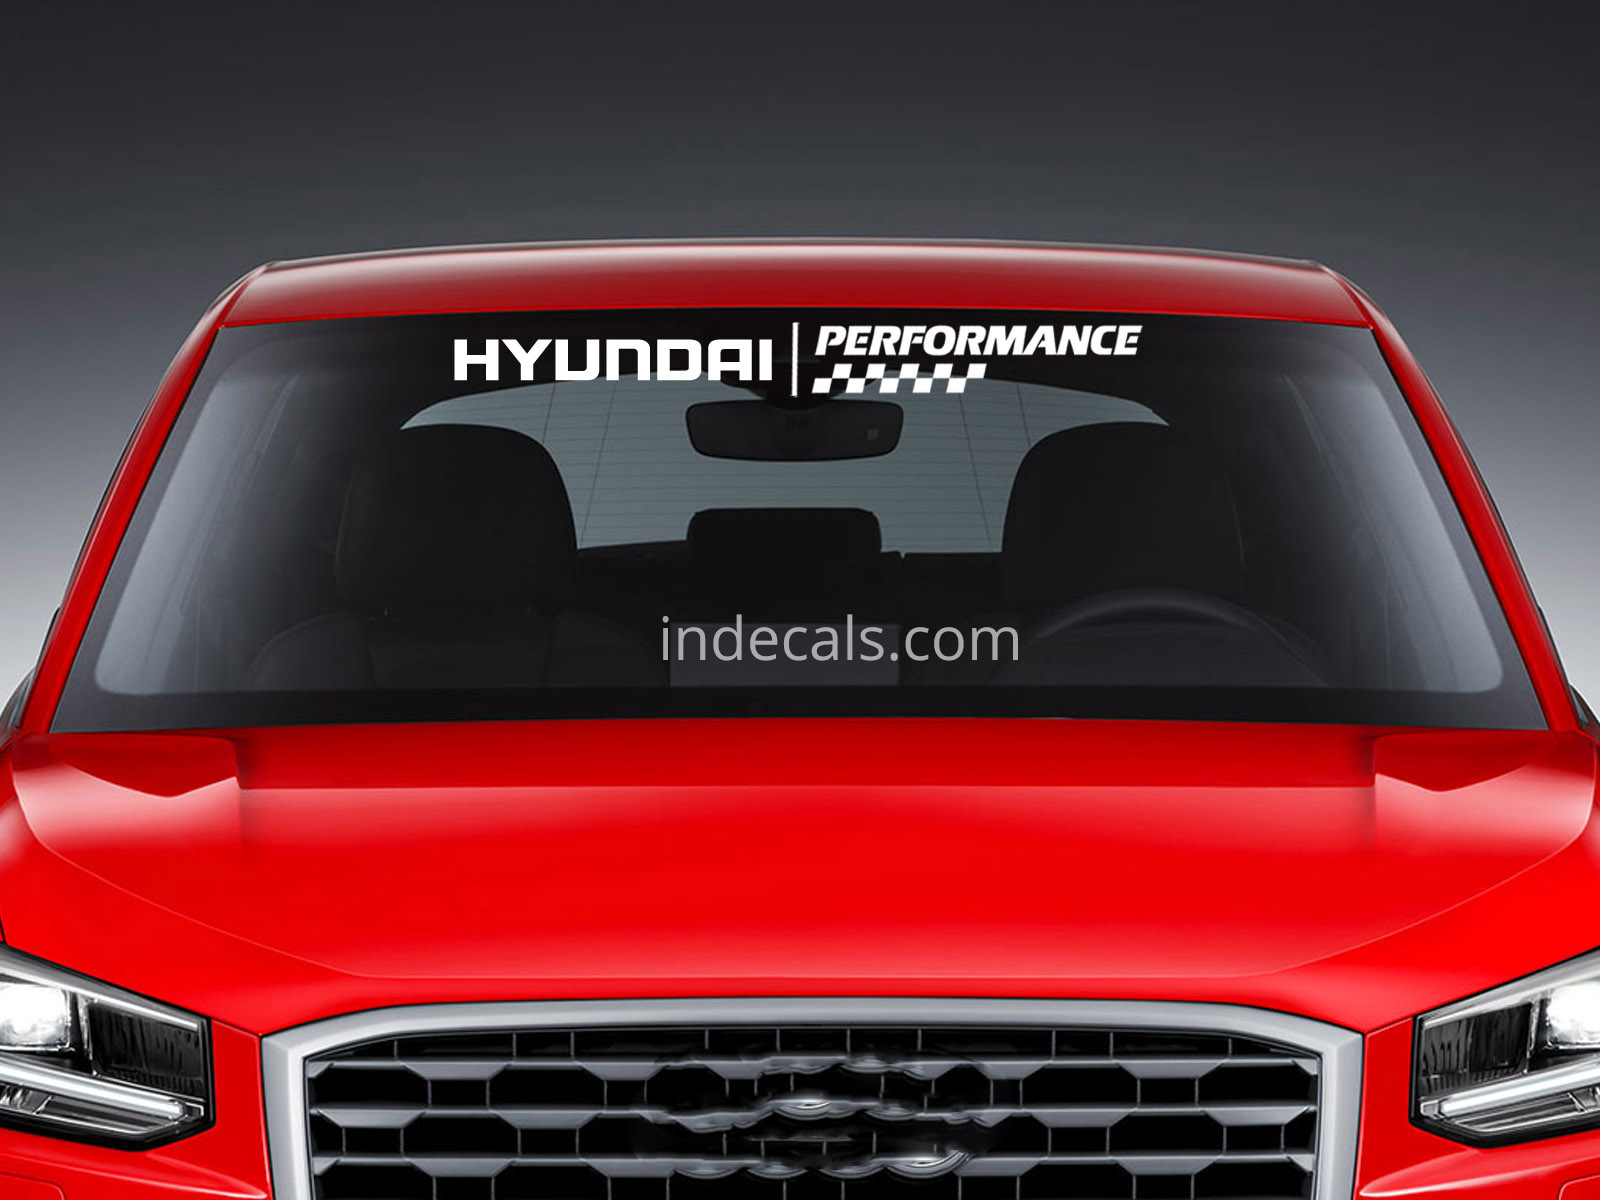 1 x Hyundai Performance Sticker for Windshield or Back Window